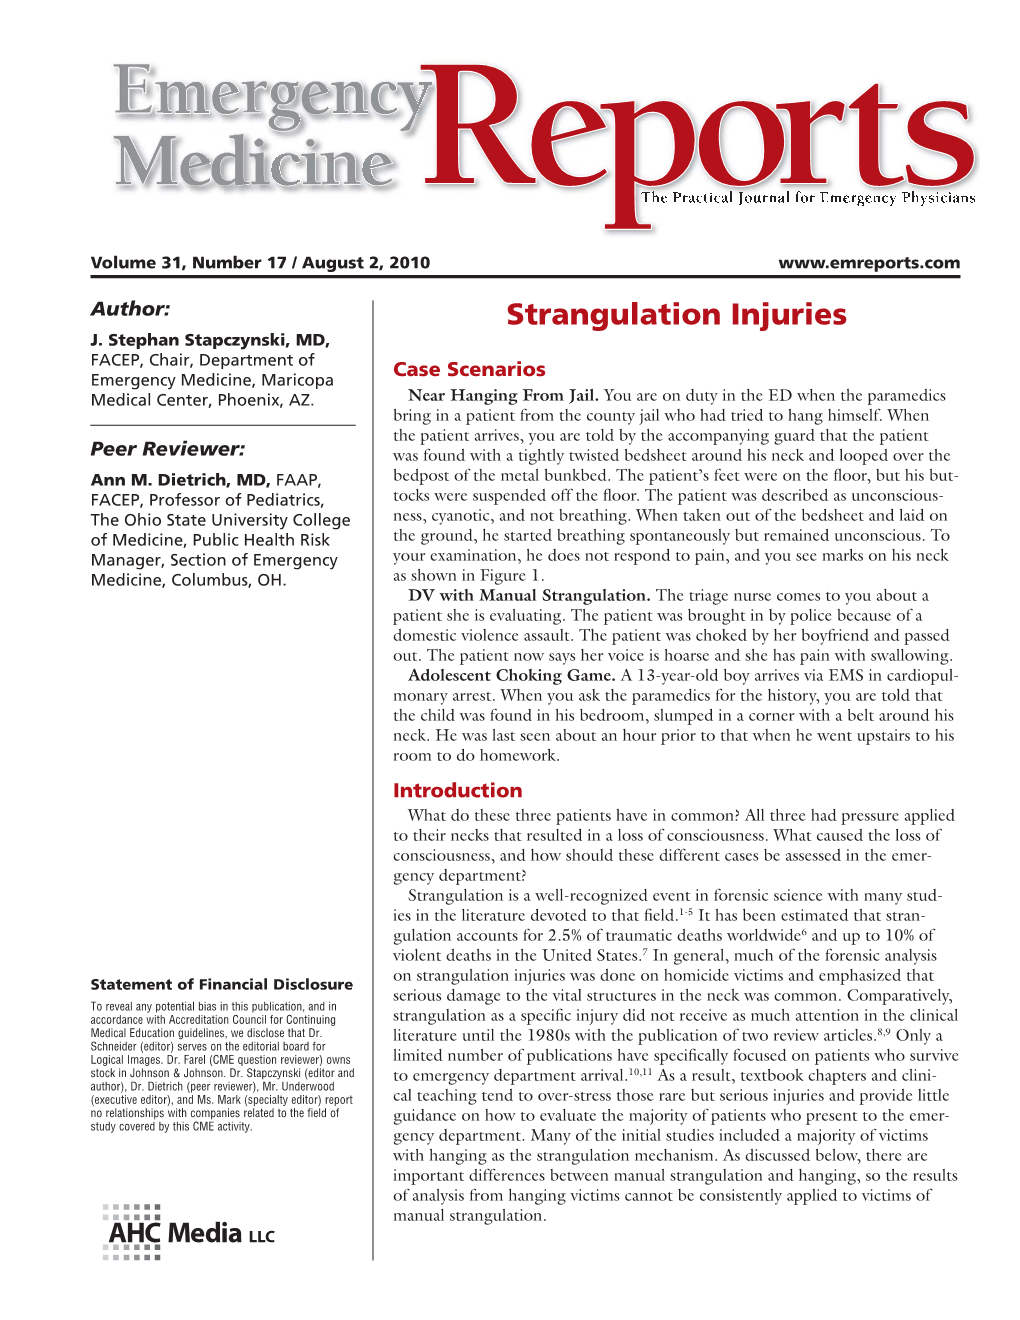 8. Stapczynski, Strangulation Injuries, Emergency Medicine Reports, 2010